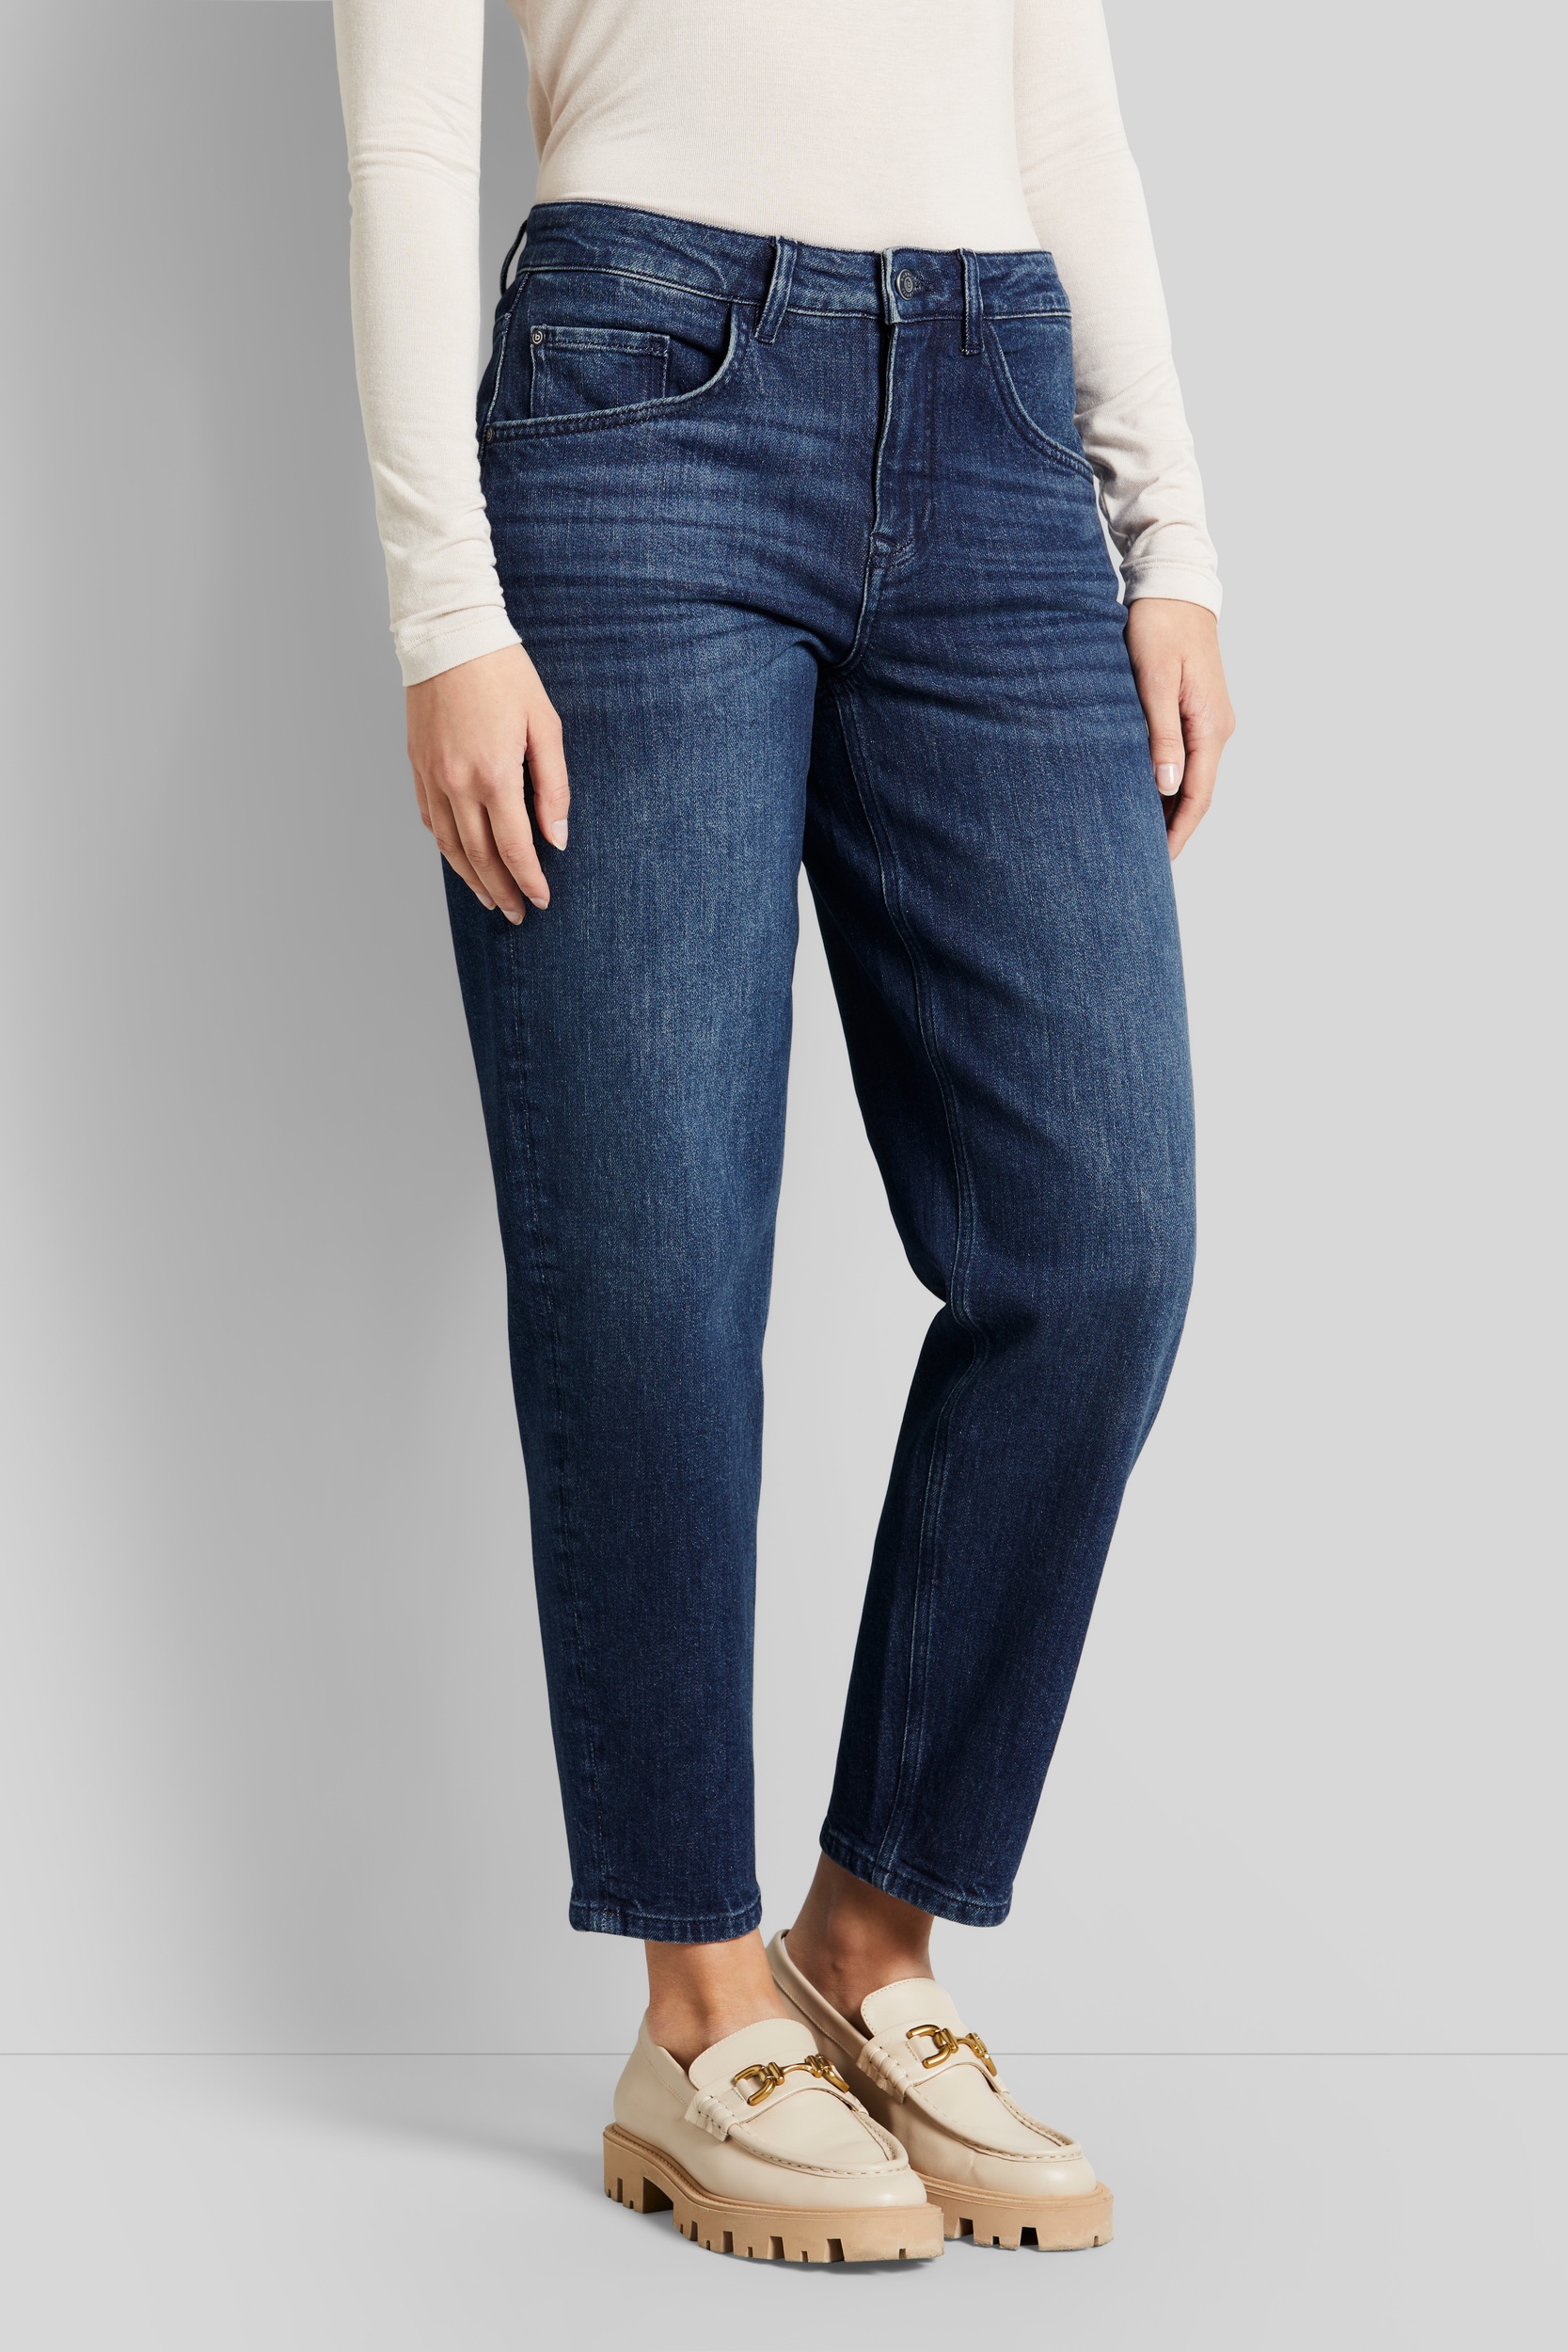 bugatti 5-Pocket-Jeans, mit lockerem Schnitt